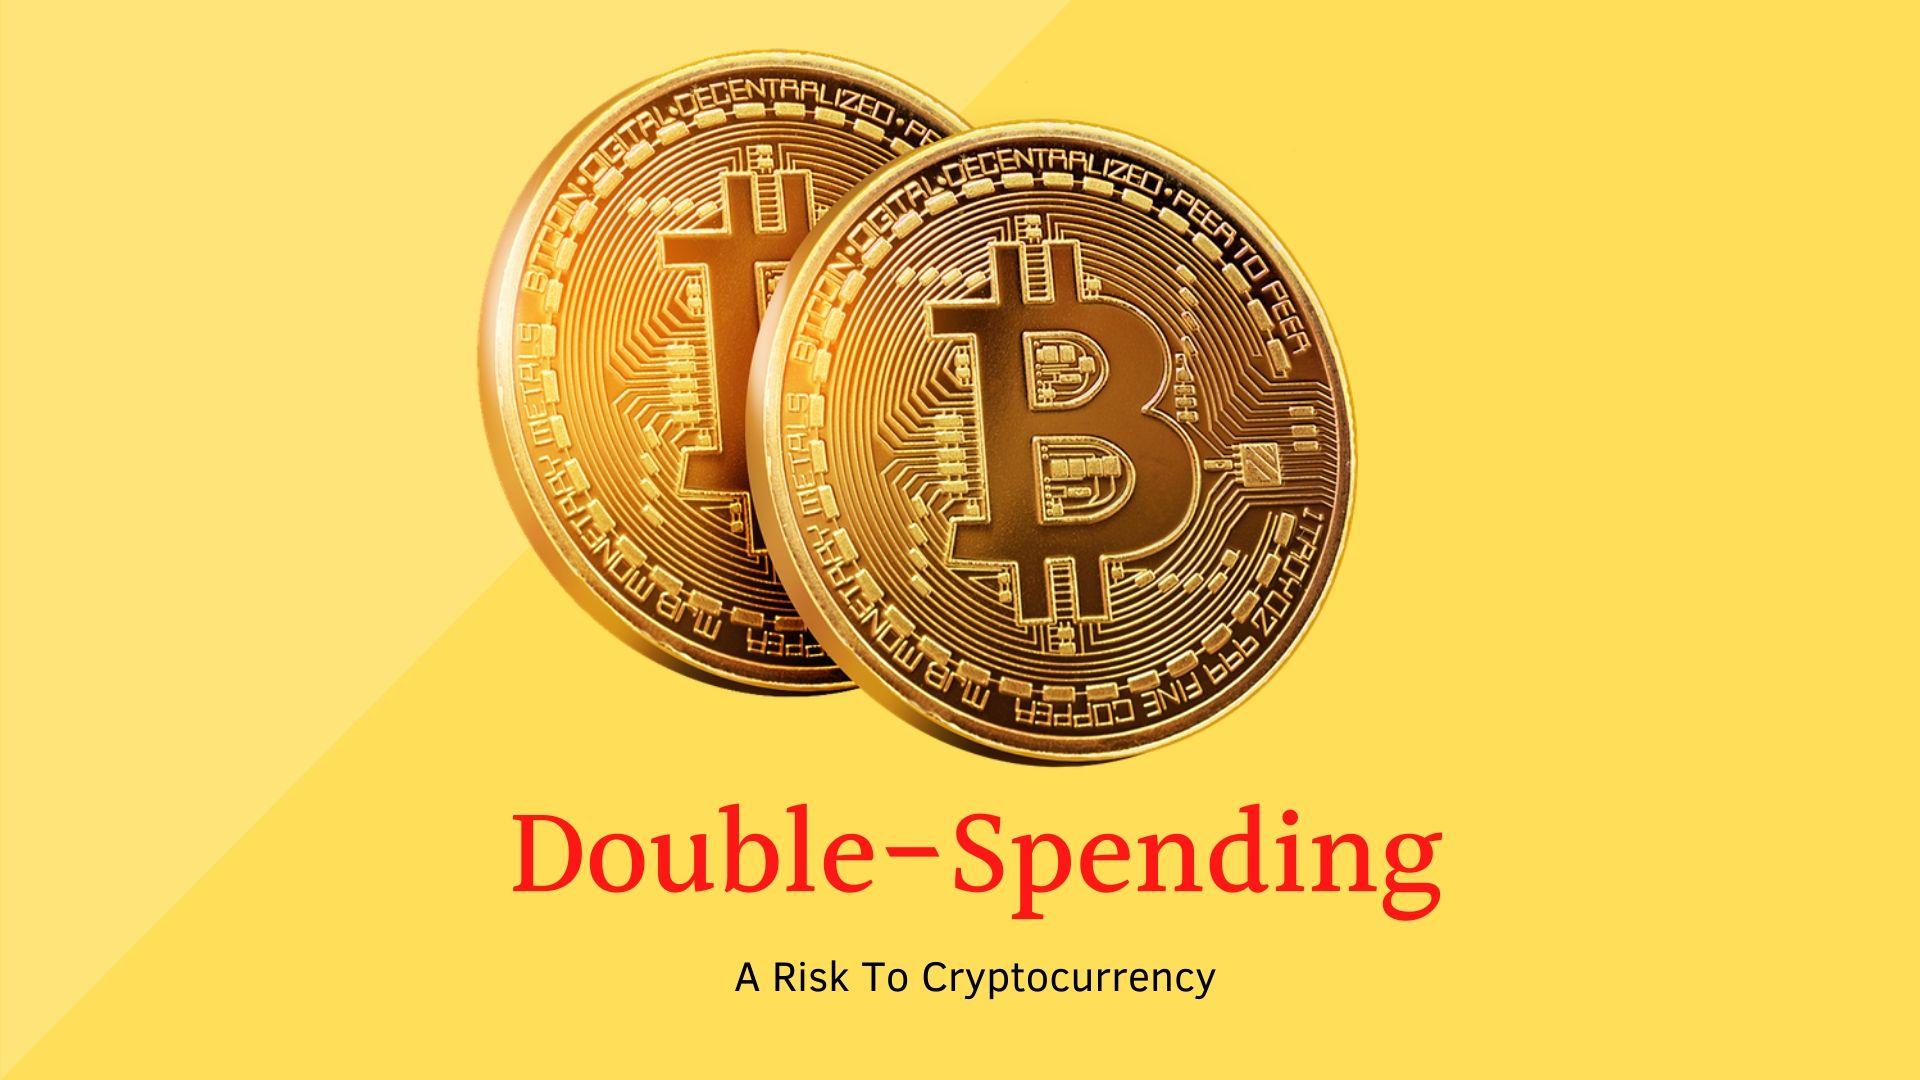 Double-spending